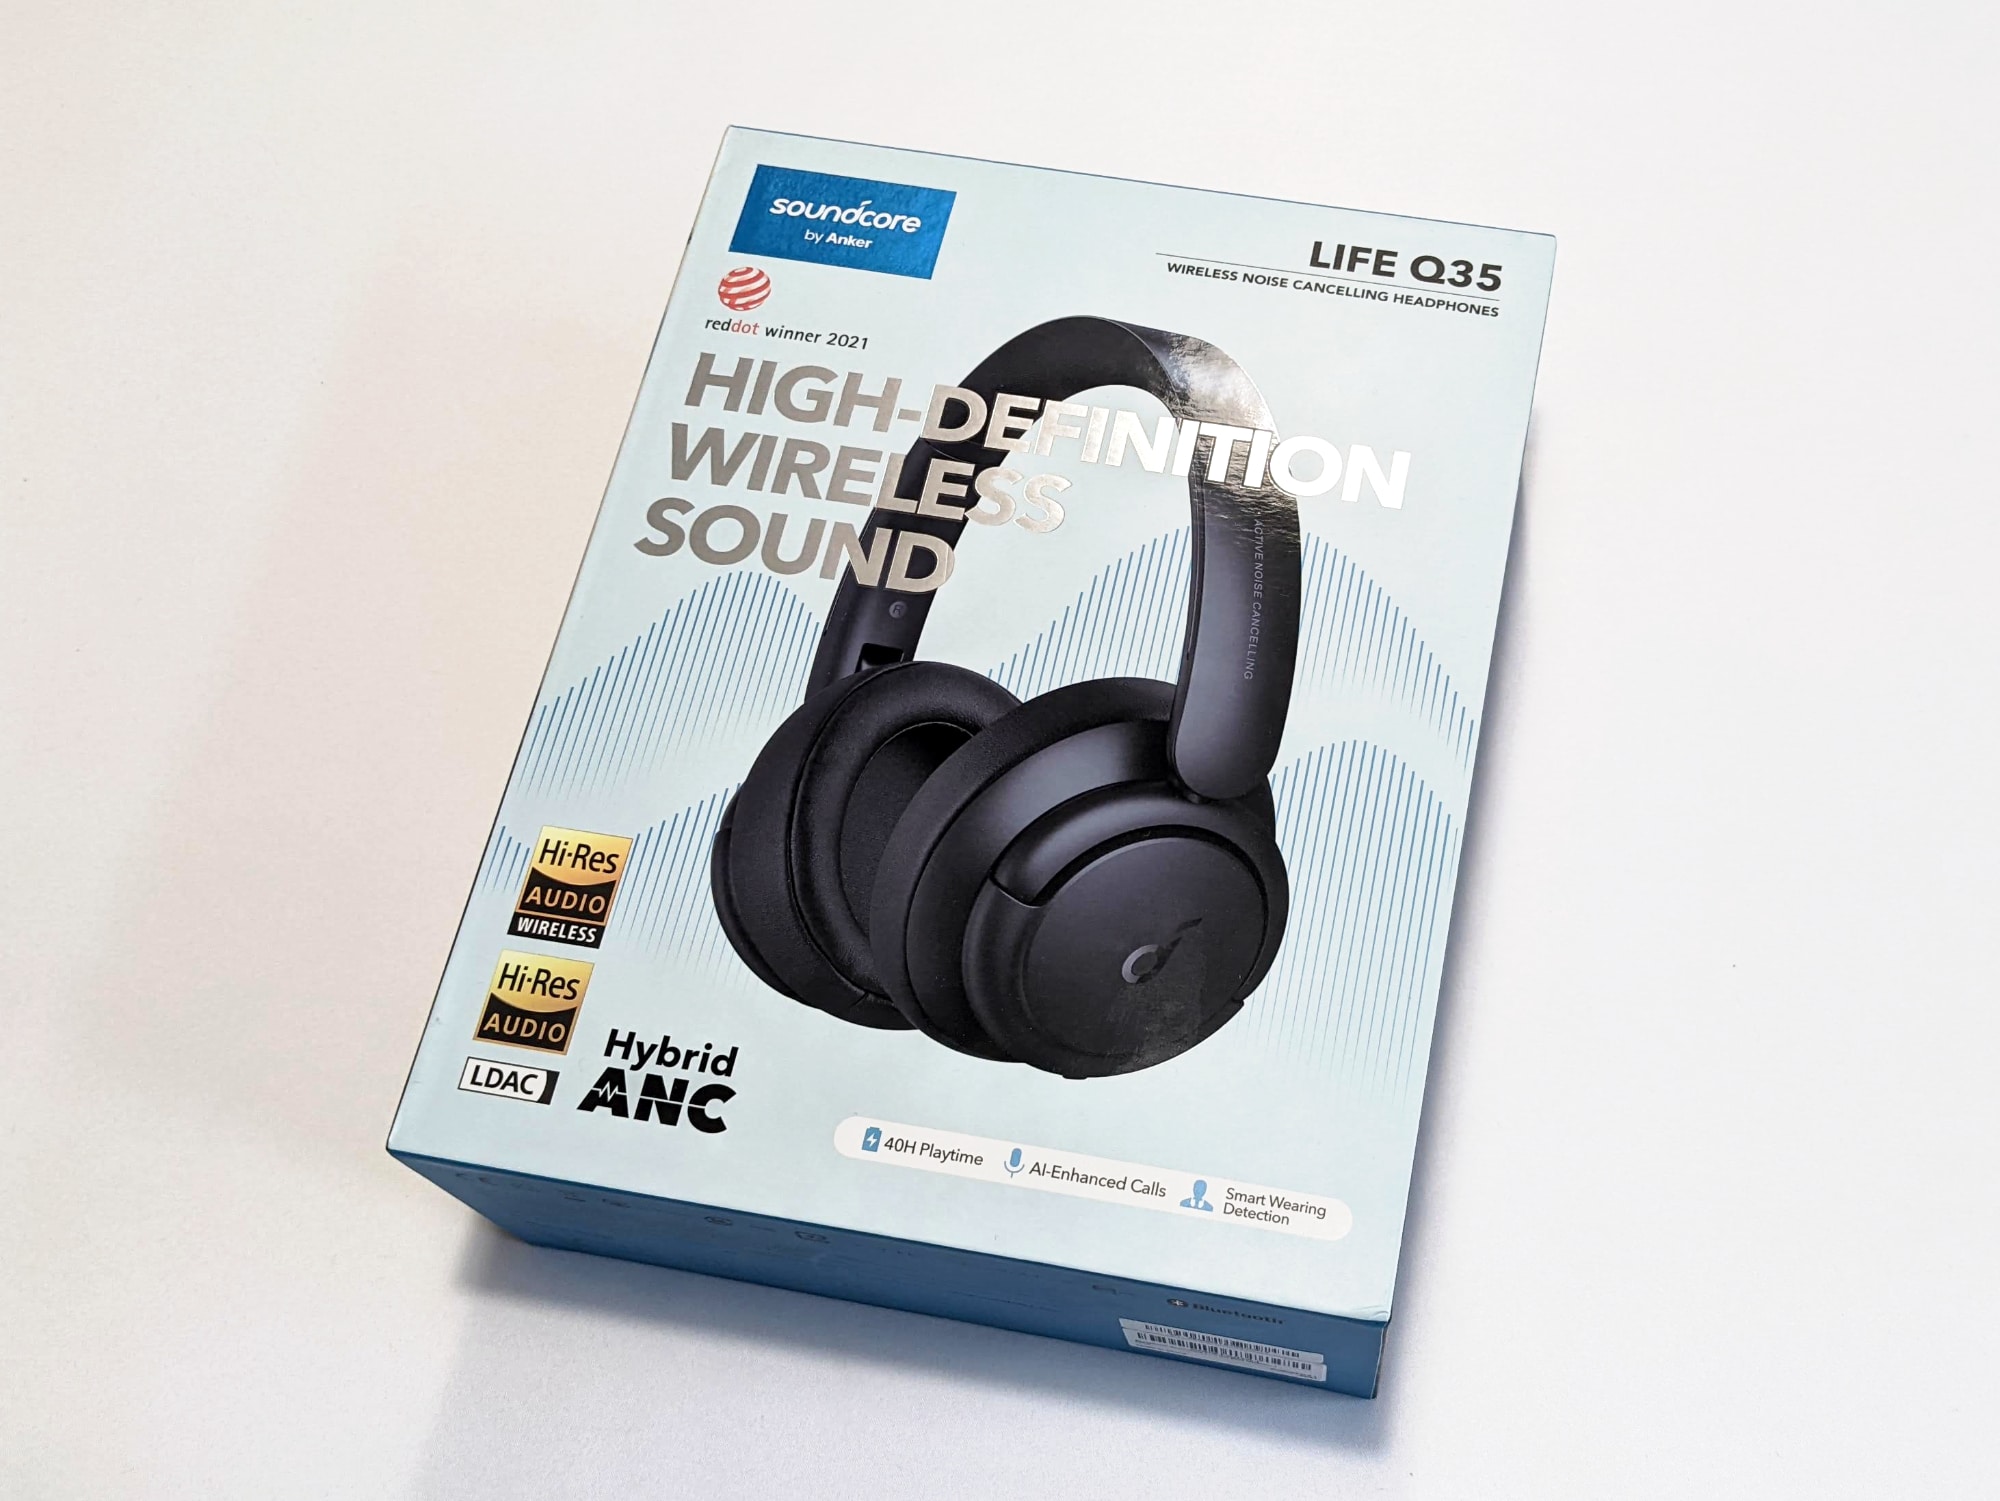 Soundcore Life Q35 - Affordable ANC headphones with Hi-Res Audio 